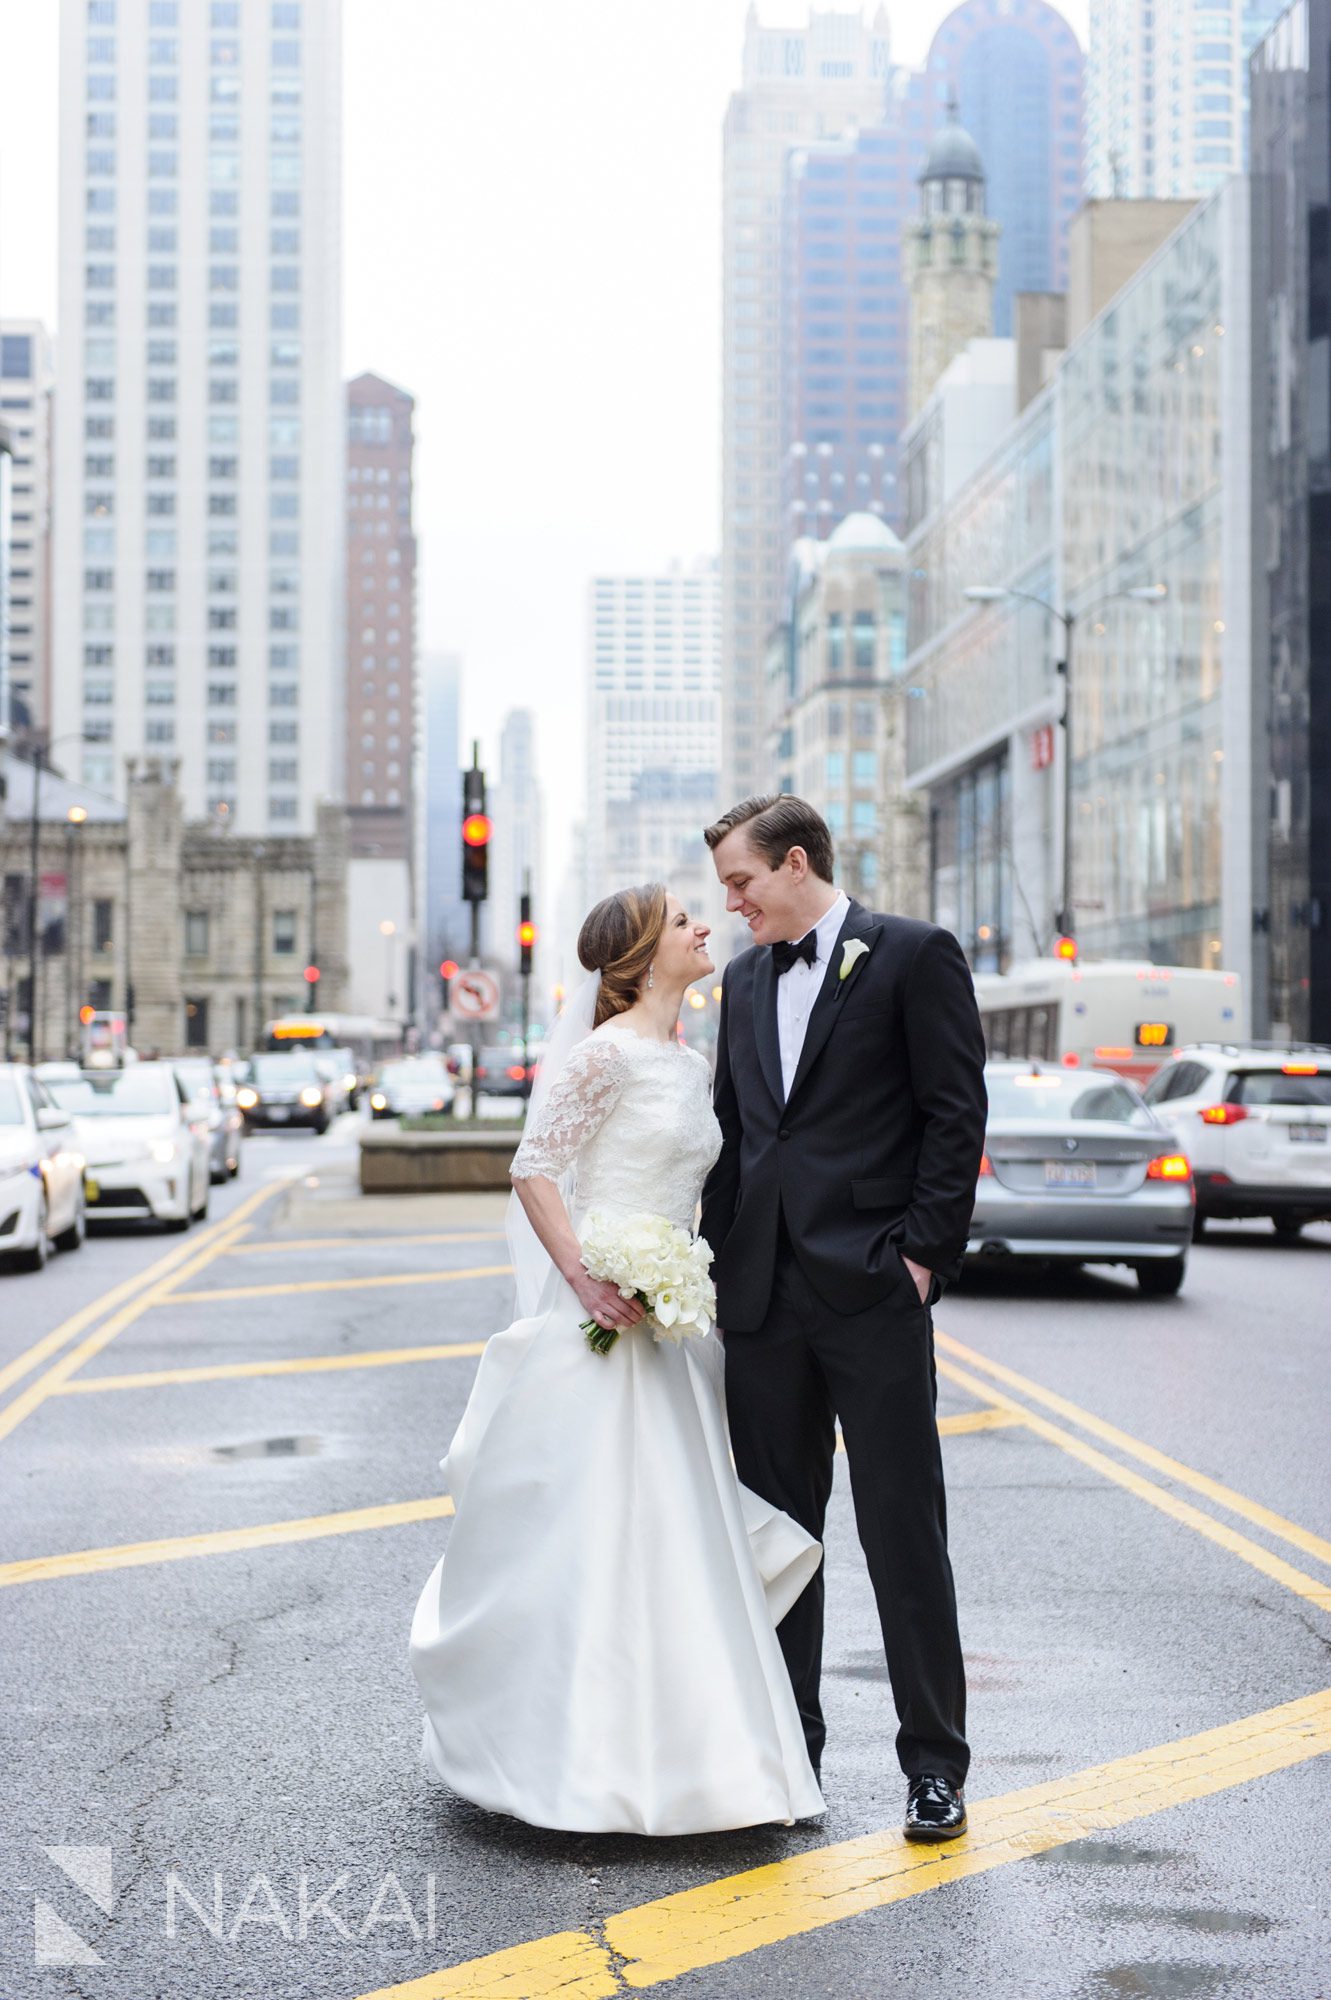 Michigan avenue wedding photographer Chicago luxury bride groom